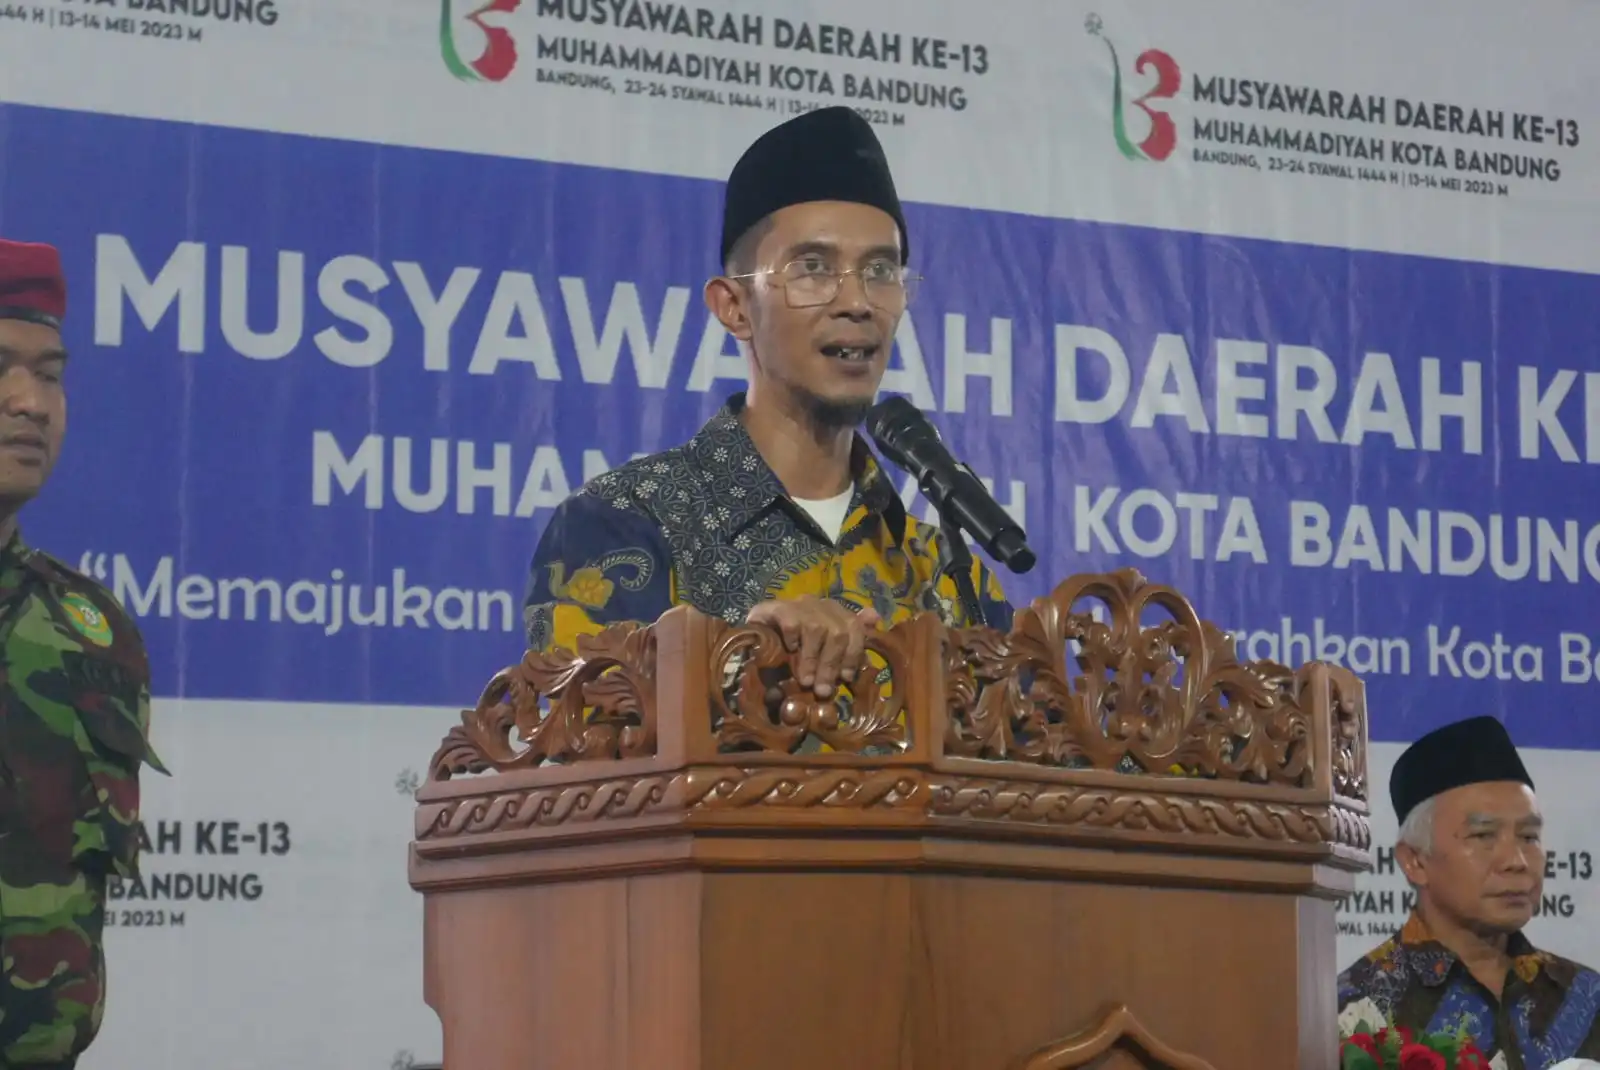 Besok Wargi Muhammadiyah Rayakan Idul Adha. Ini Lokasi Sholat Ied & Nama Imamnya di Kota Bandung